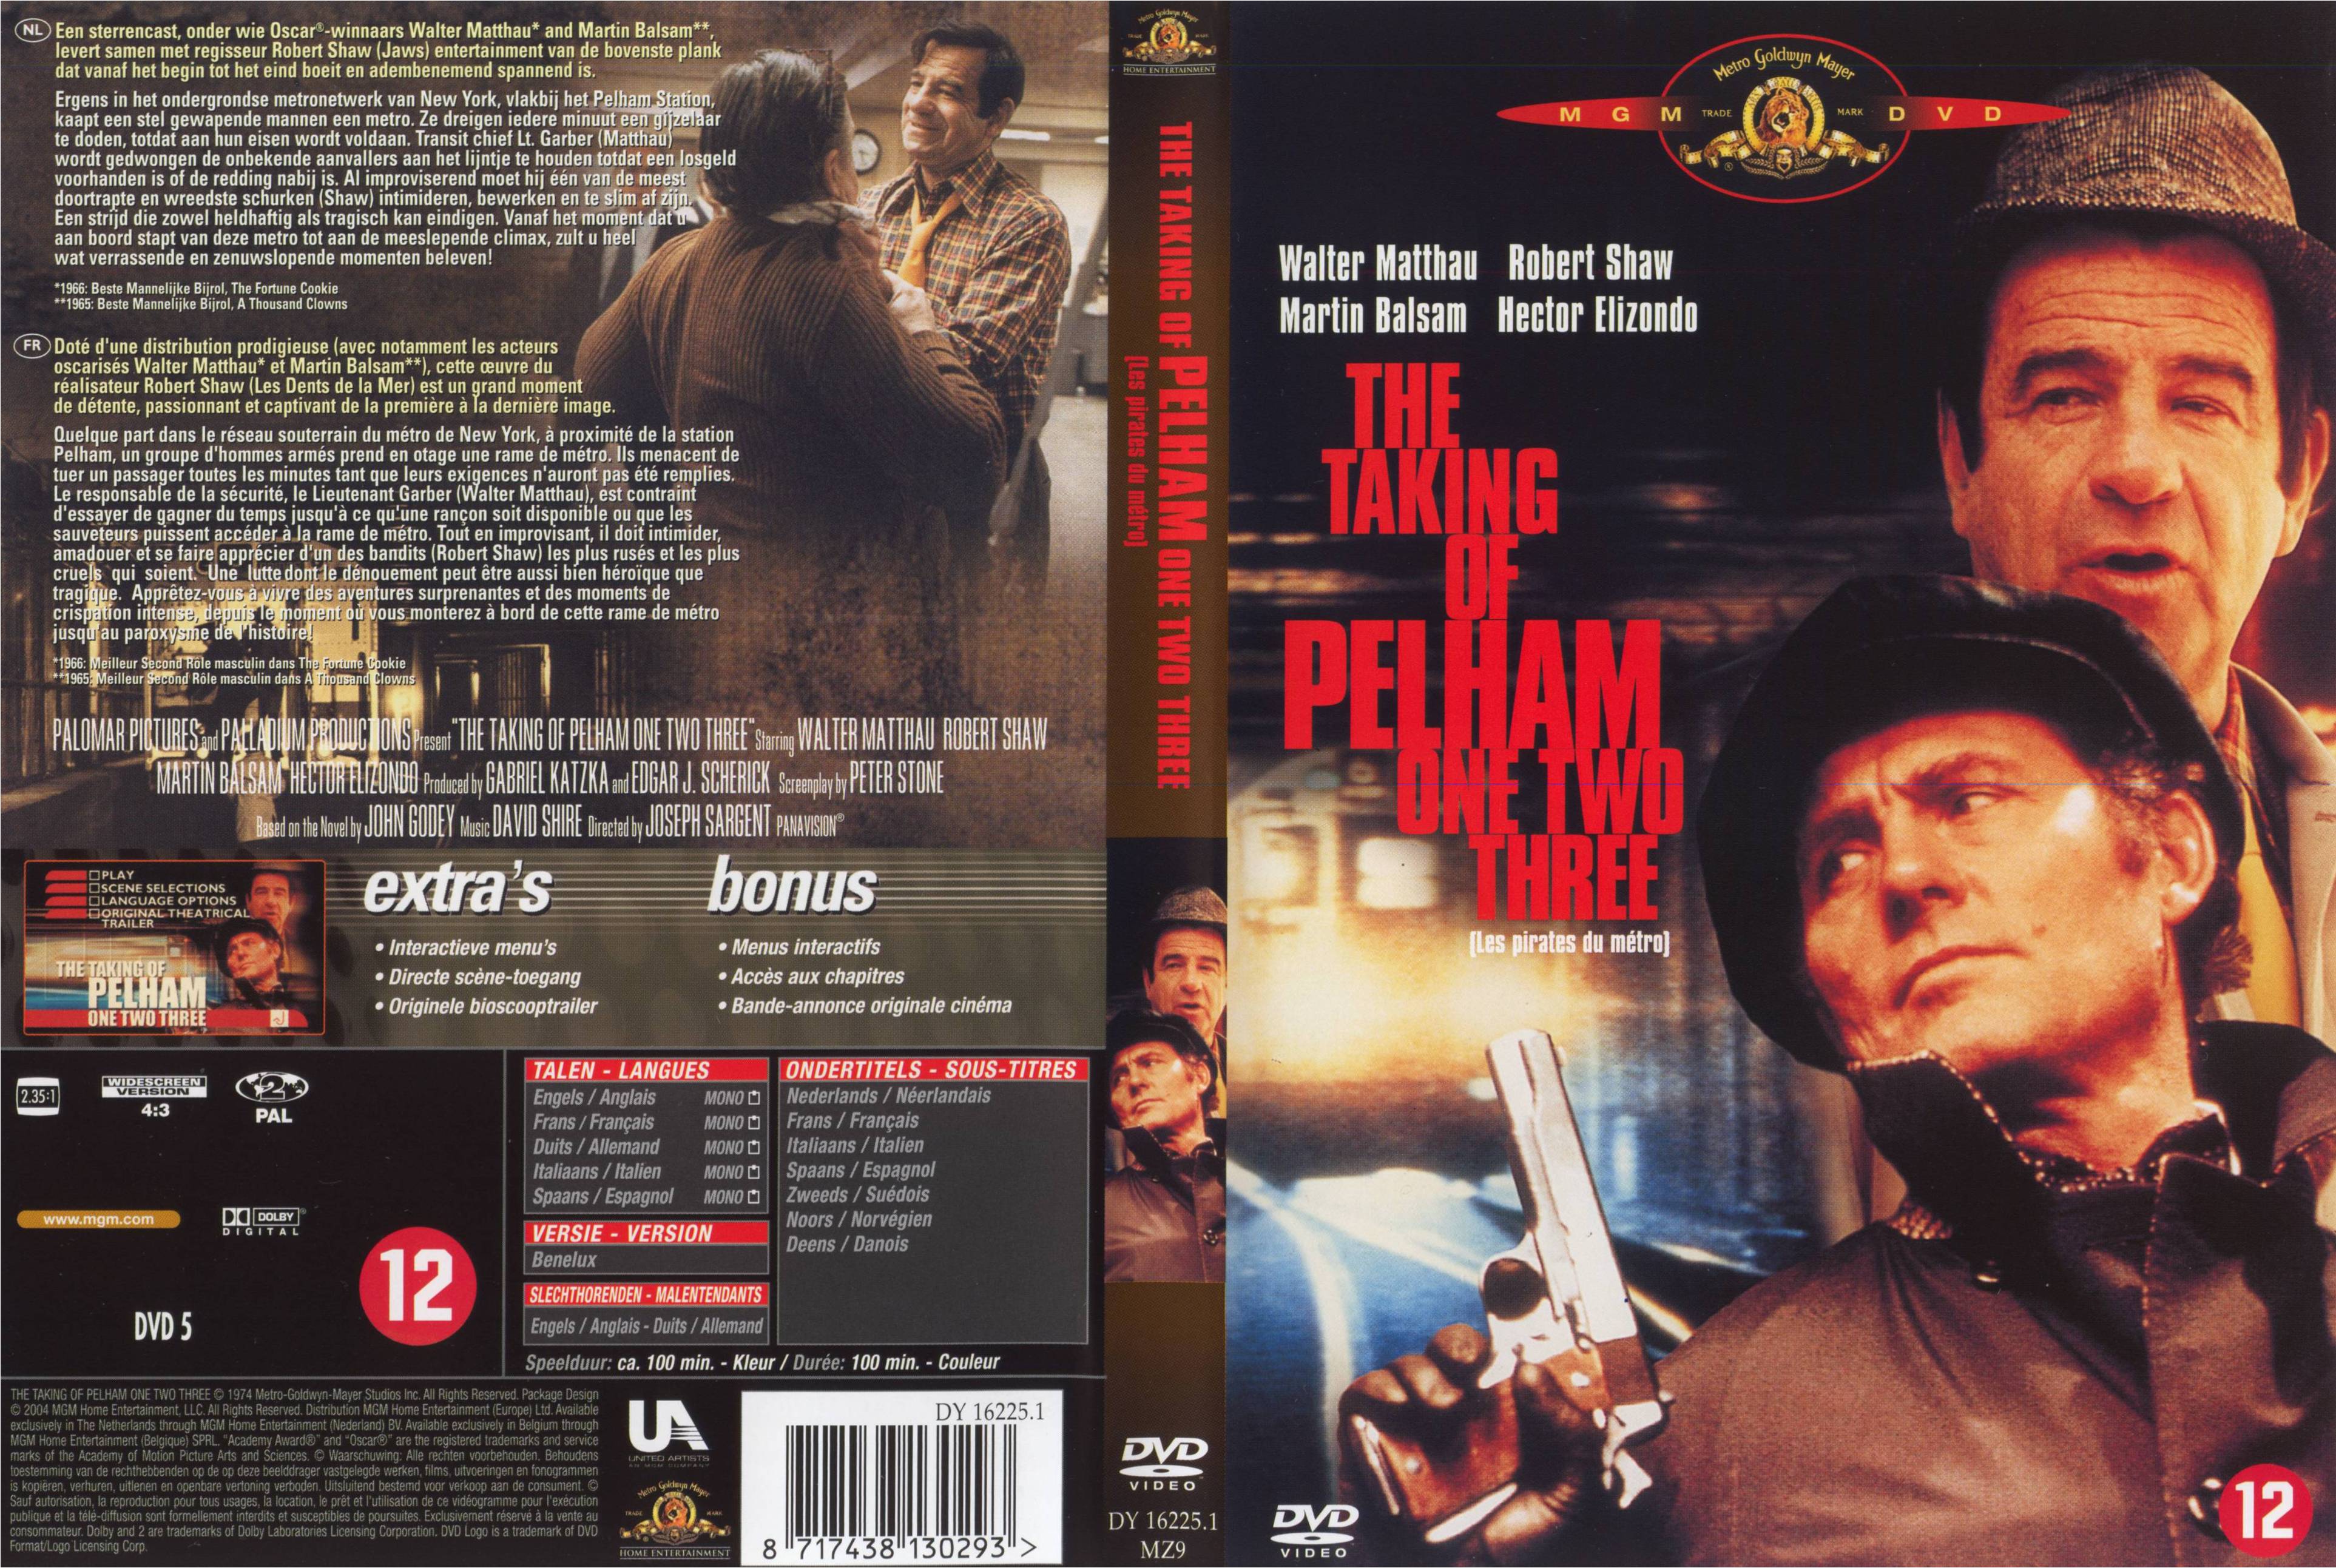 Jaquette DVD The taking of pelham - Les pirates du mtro